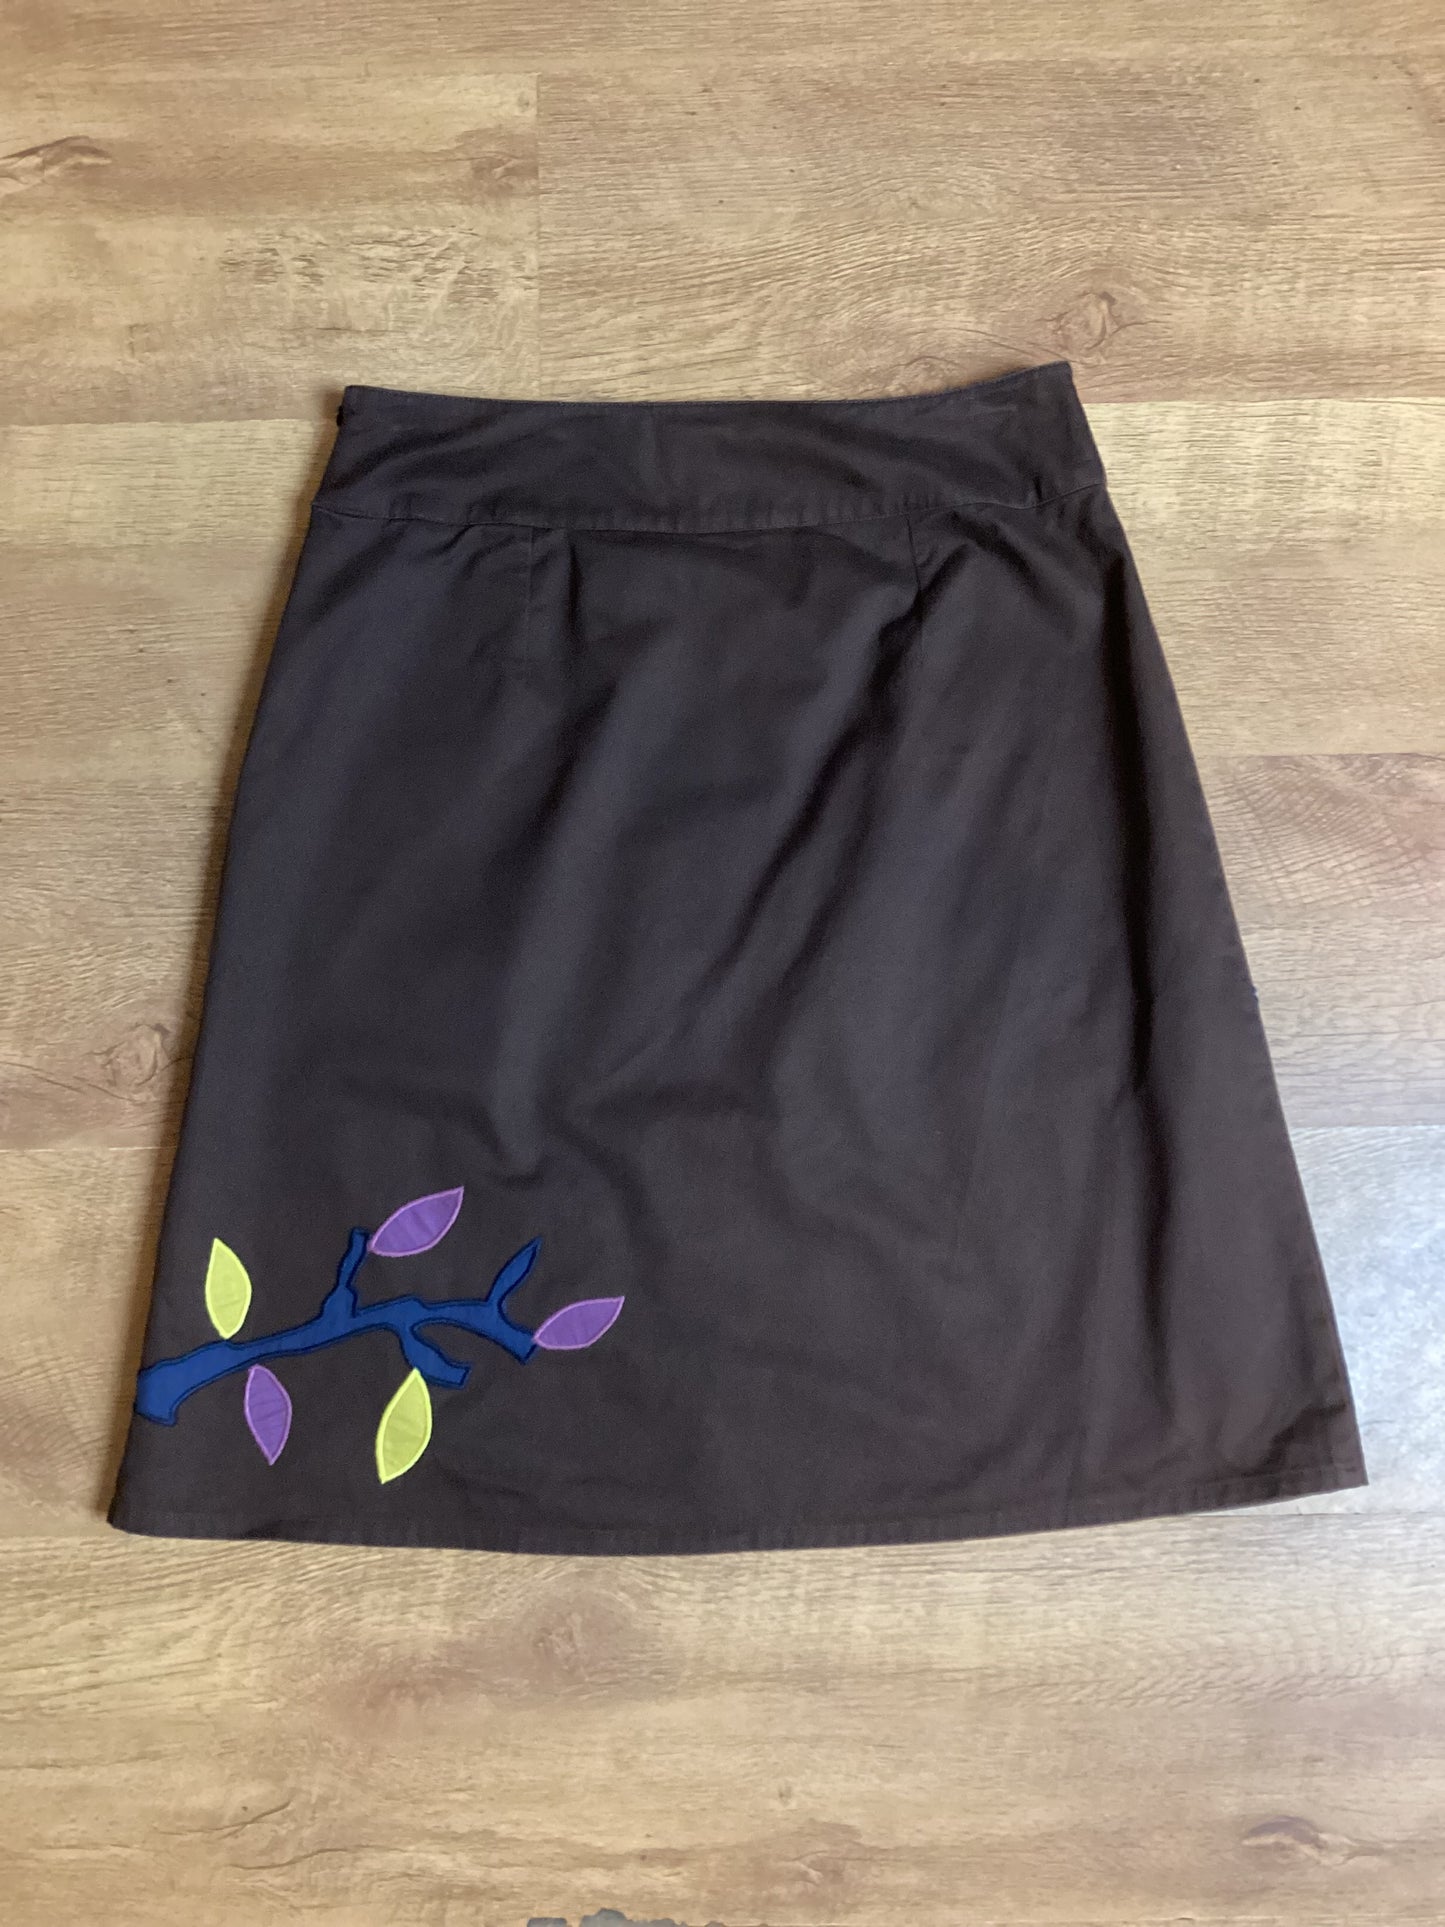 Boden 100% Cotton Patchwork Bird Skirt Size 12R